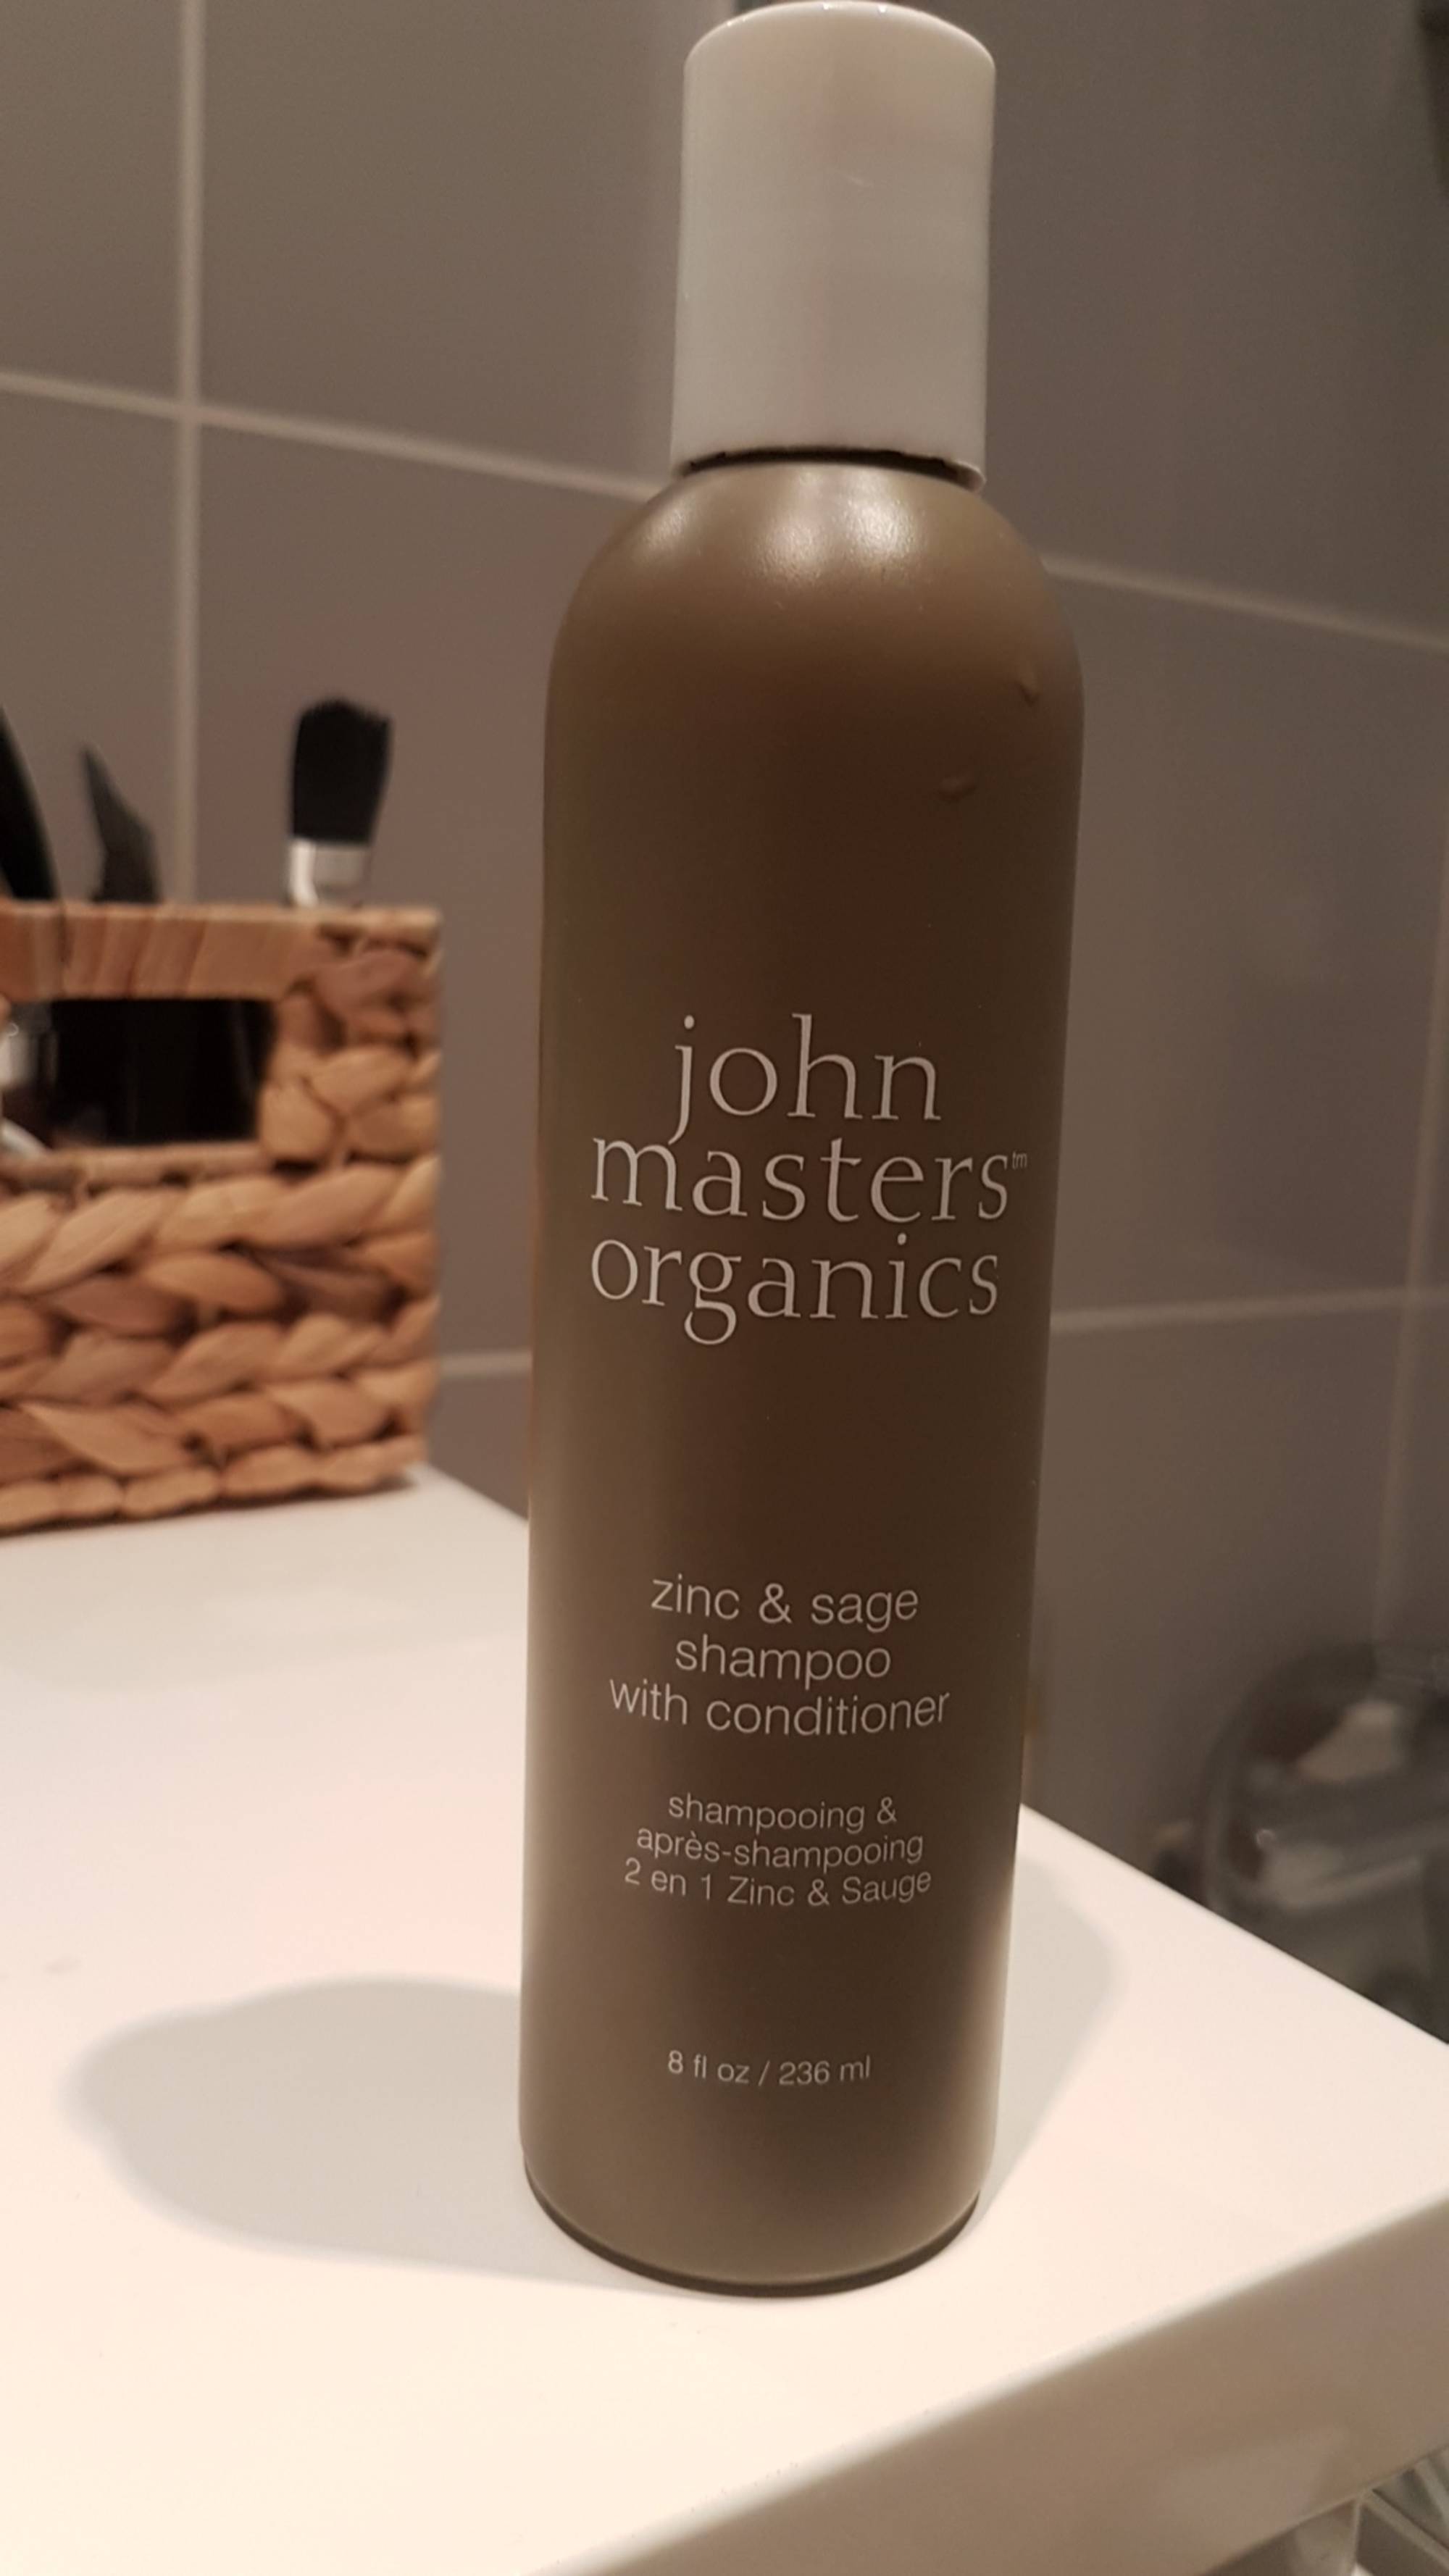 JOHN MASTERS ORGANICS - Shampooing & après-shampooing 2 en 1 zinc & sauge